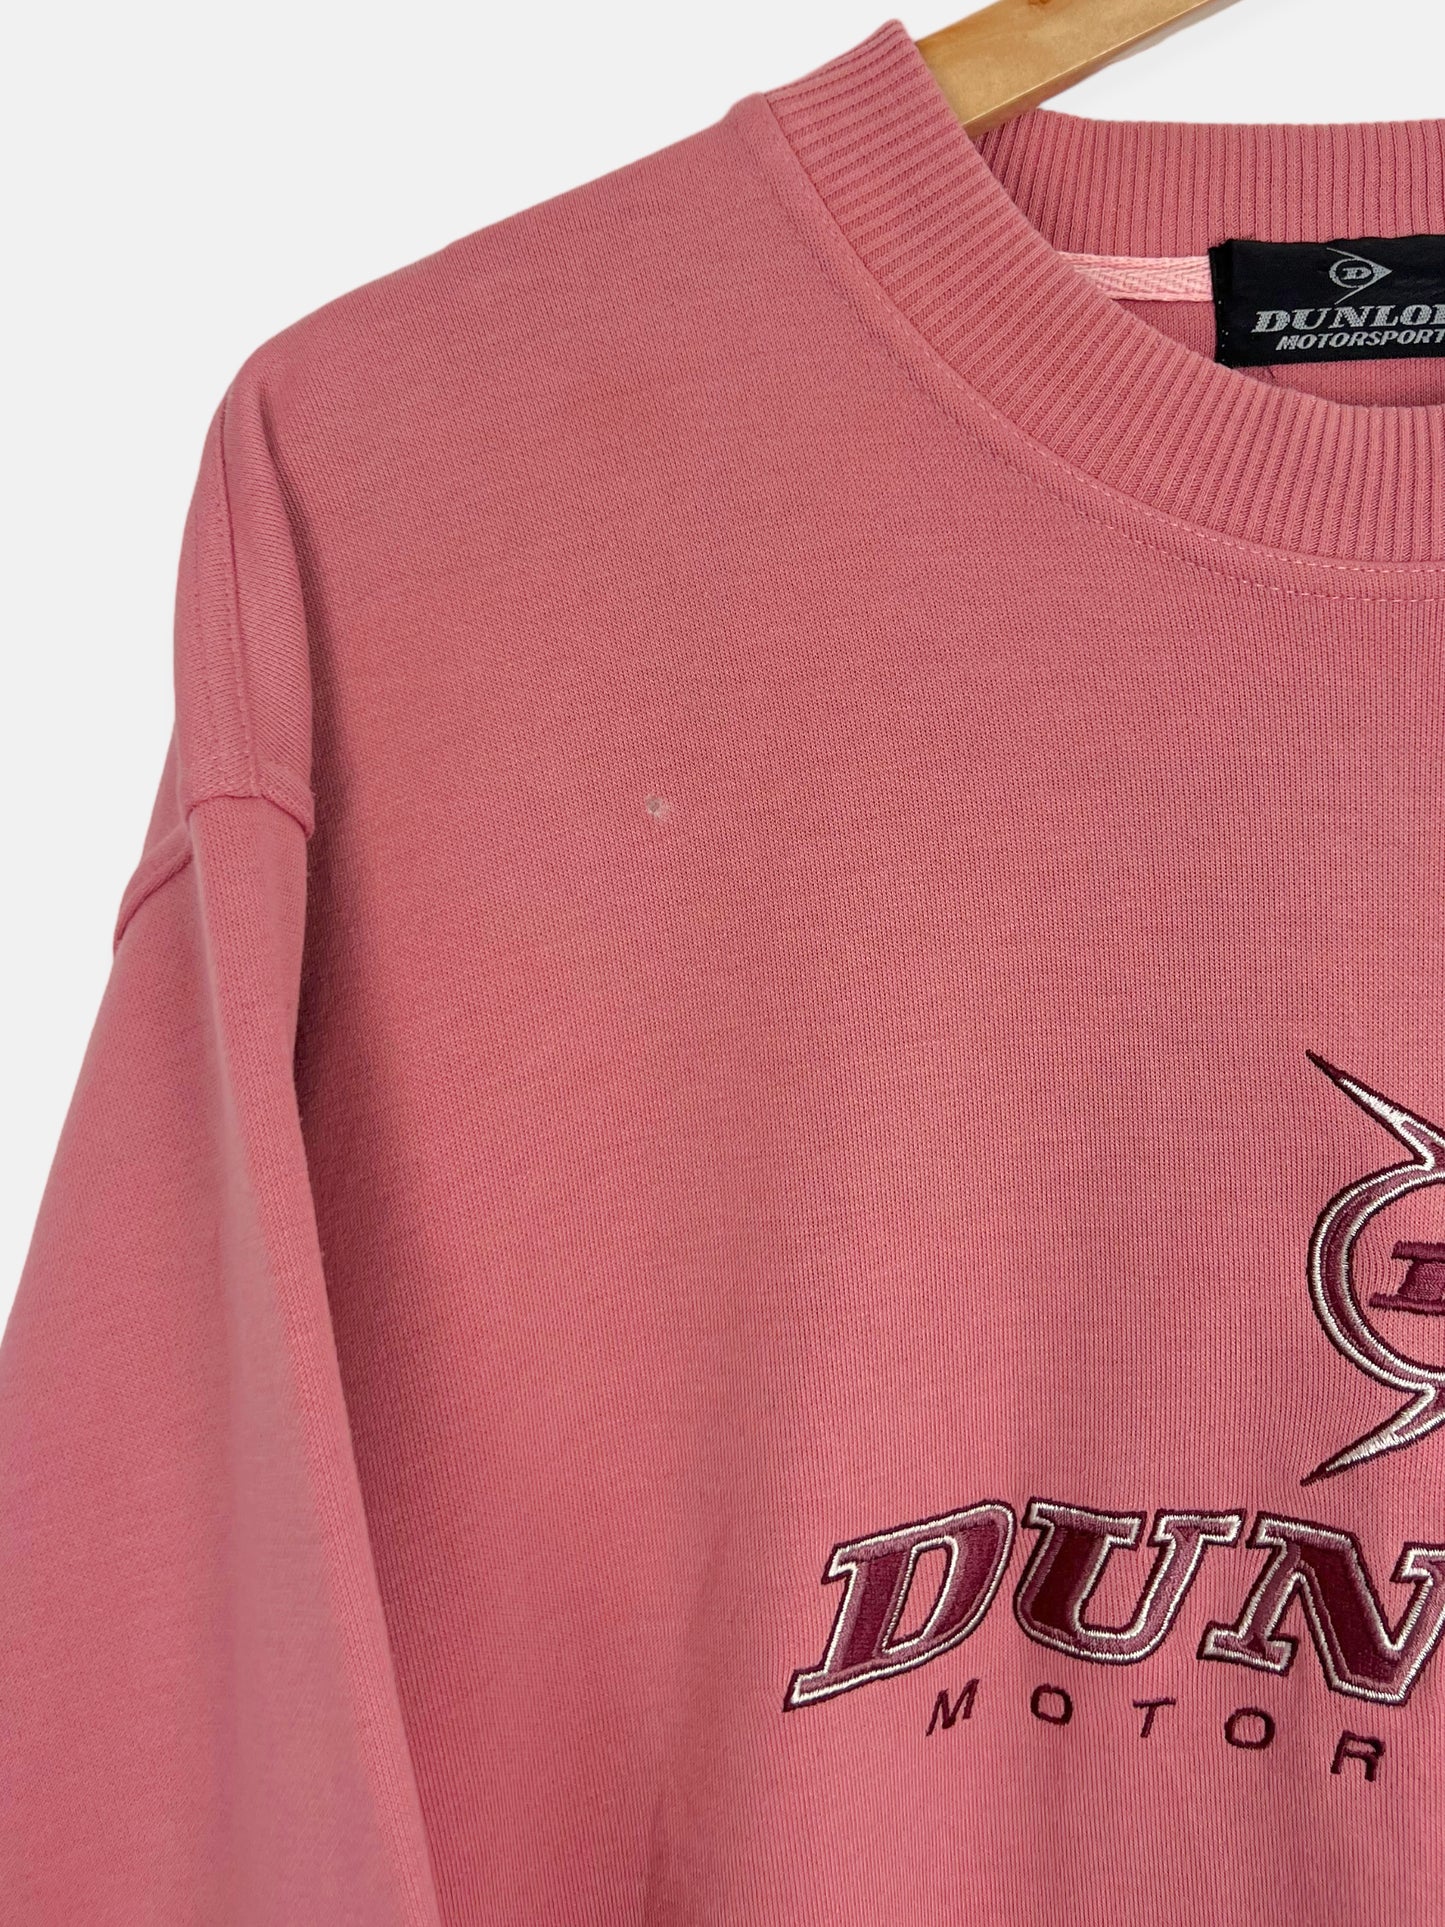 90's Dunlop Motorsports Embroidered Vintage Sweatshirt Size 12-14